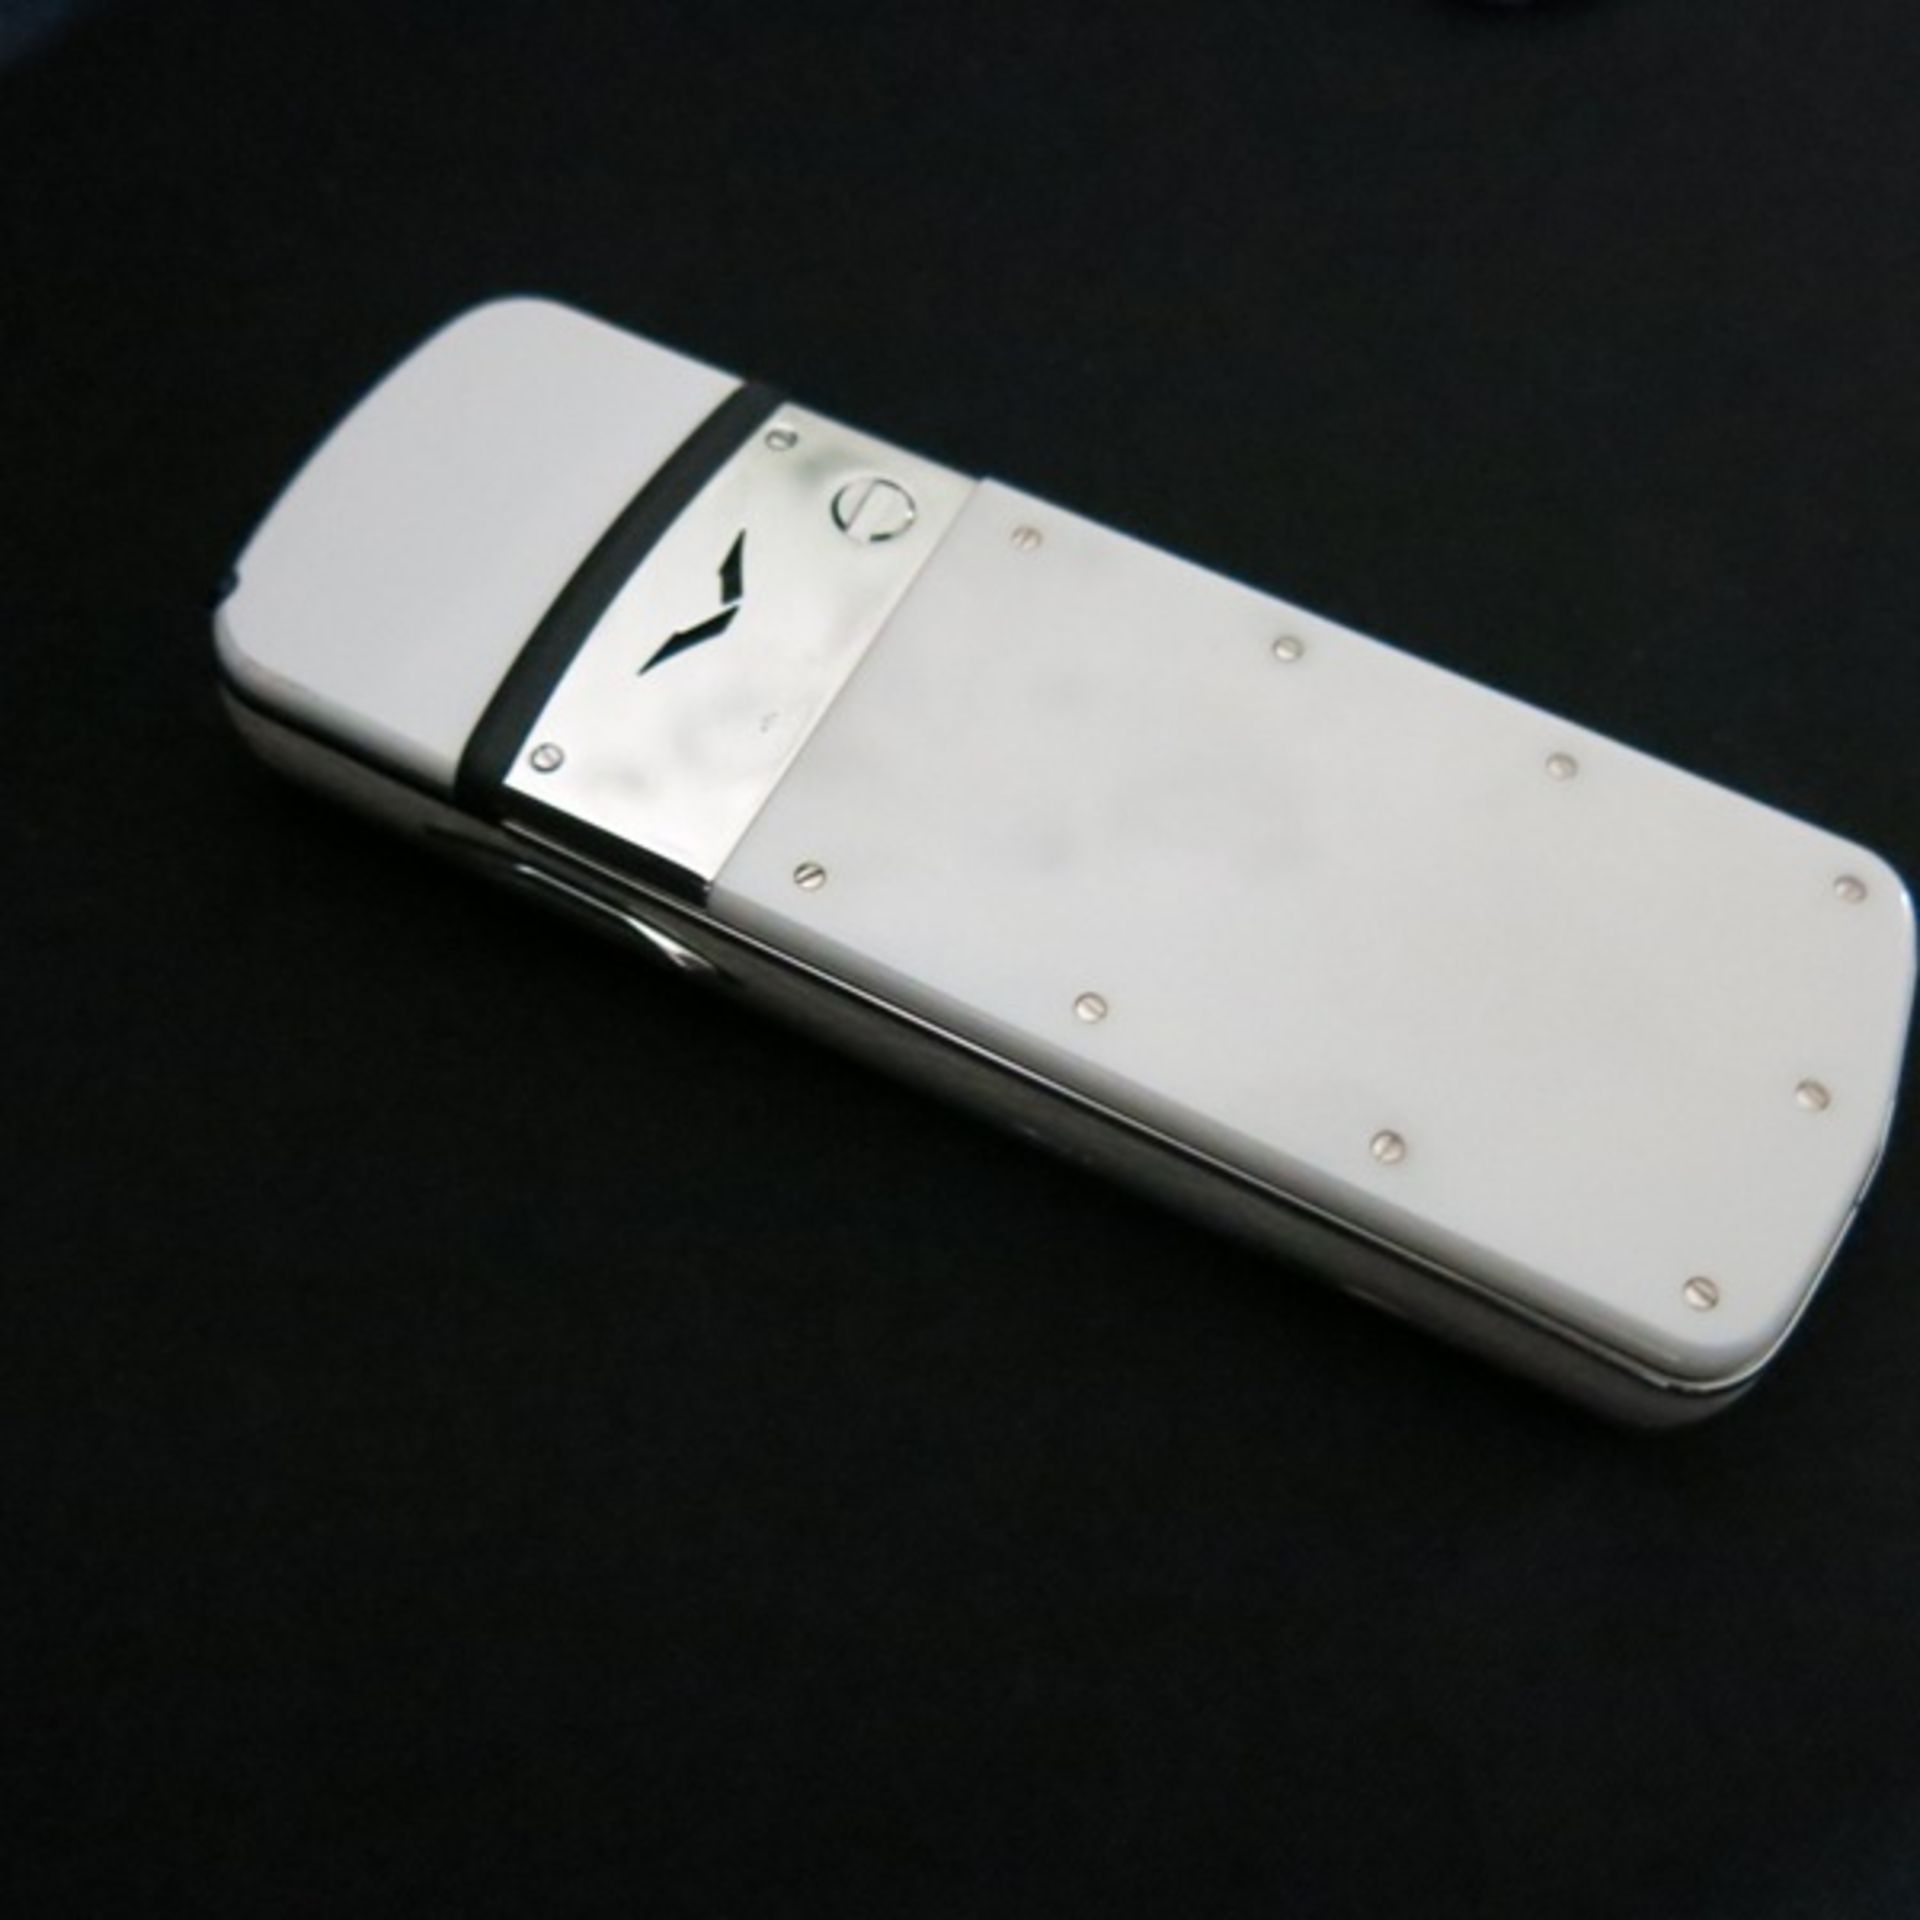 Vertu Signature Classic Phone in Platinum (950) with Platinum Functional Keys & Outer Cover. - Image 2 of 3